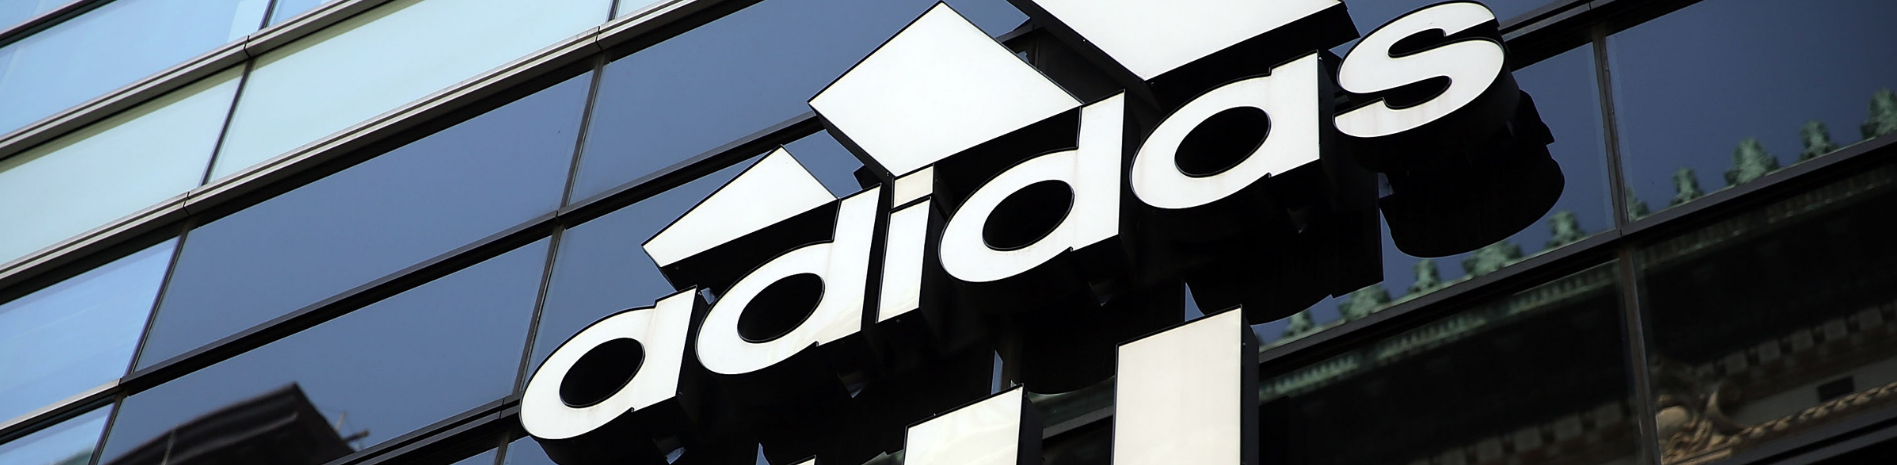 History of Brands: Adidas